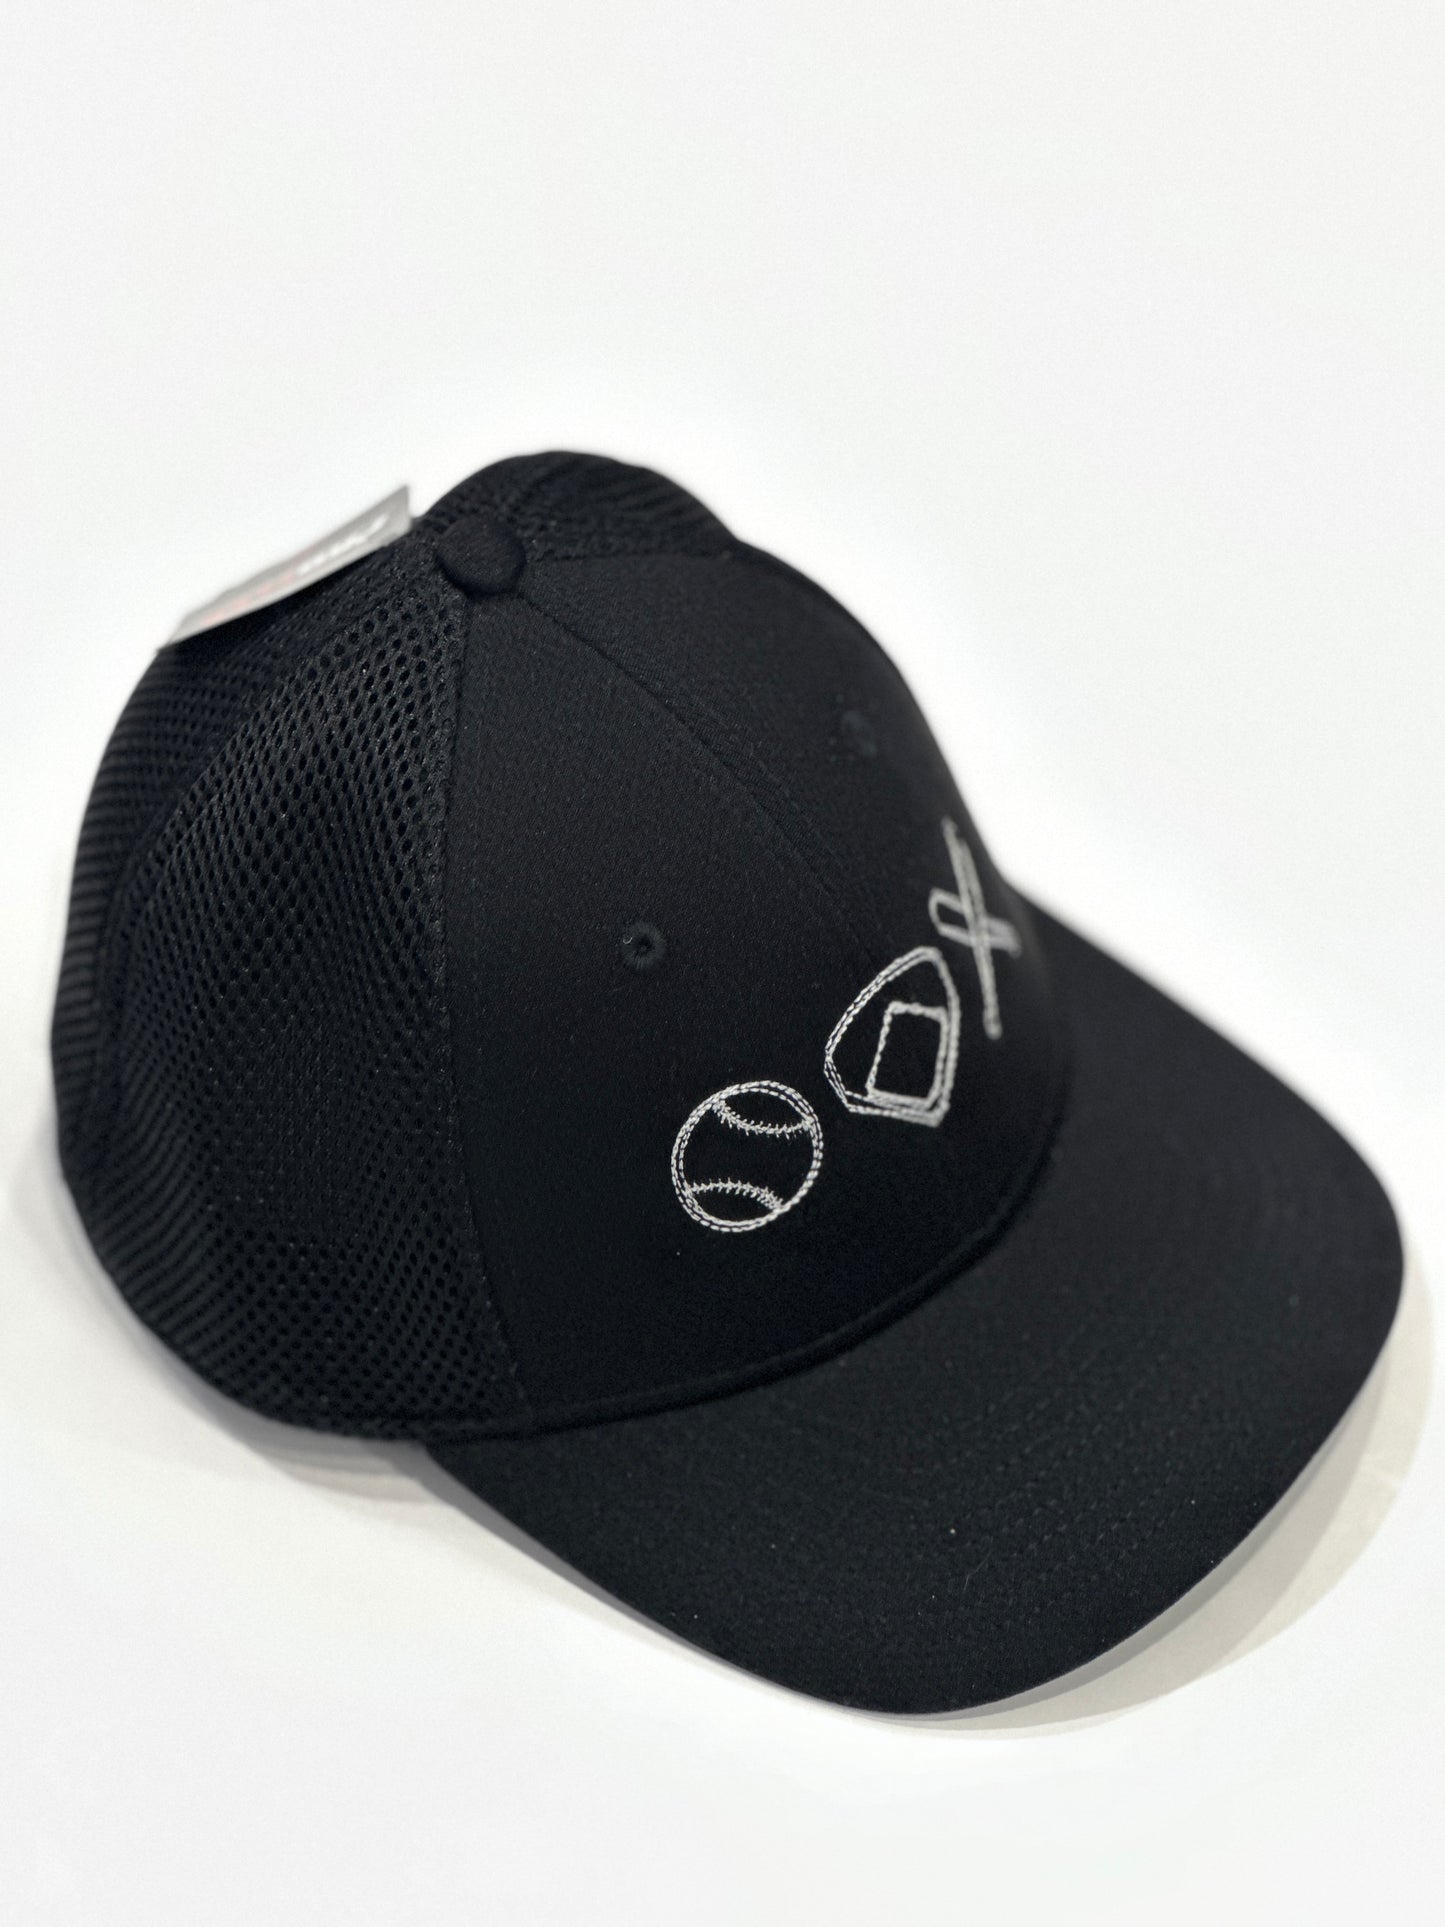 OC Proflex Black Sports Hat W/ White Embroidery